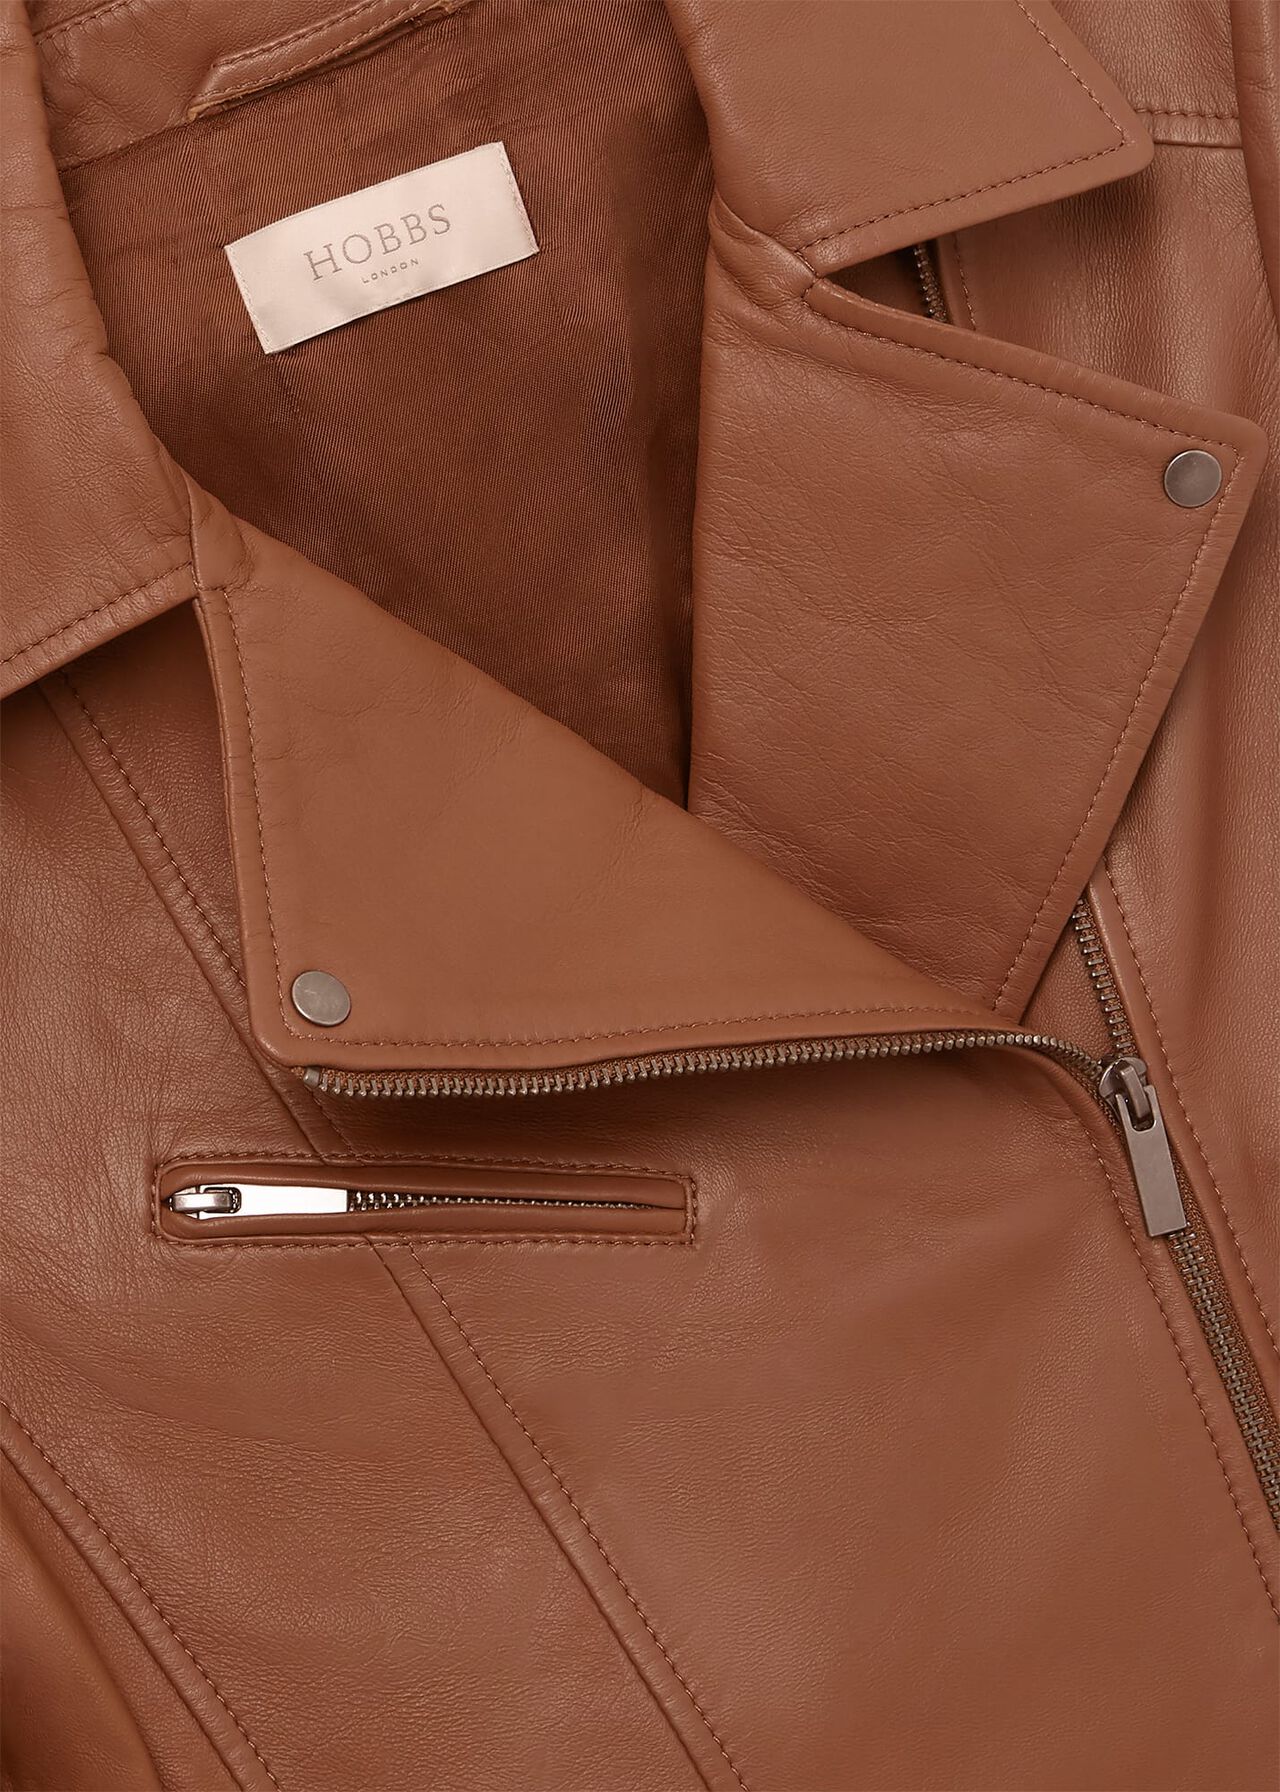 Dakota Leather Jacket, Tan, hi-res